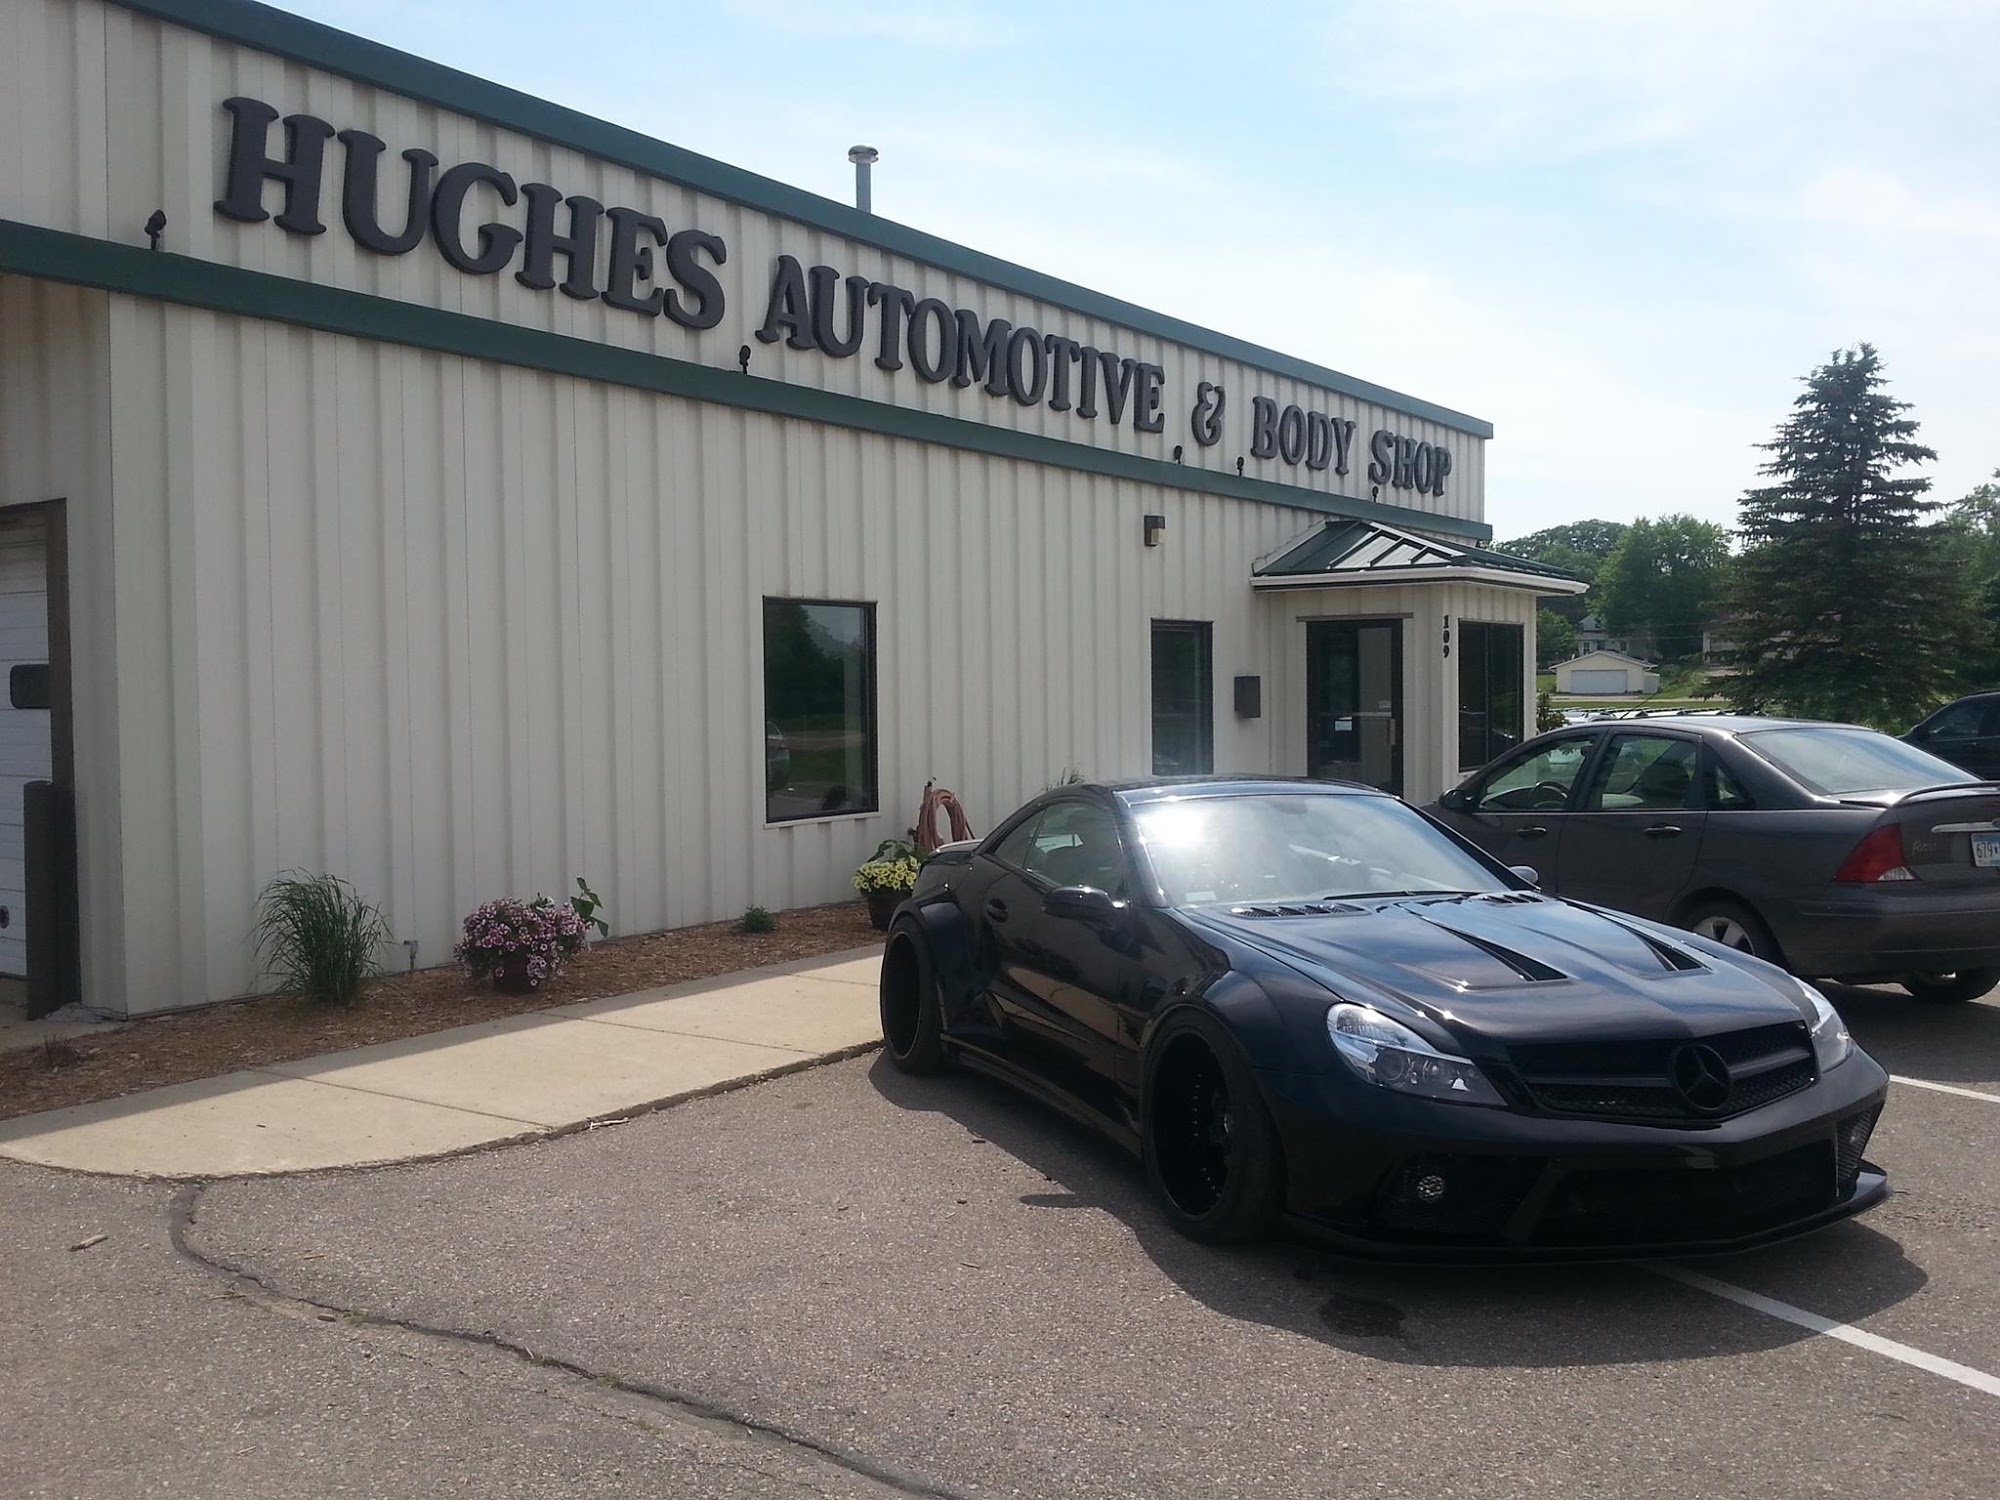 Hughes Automotive